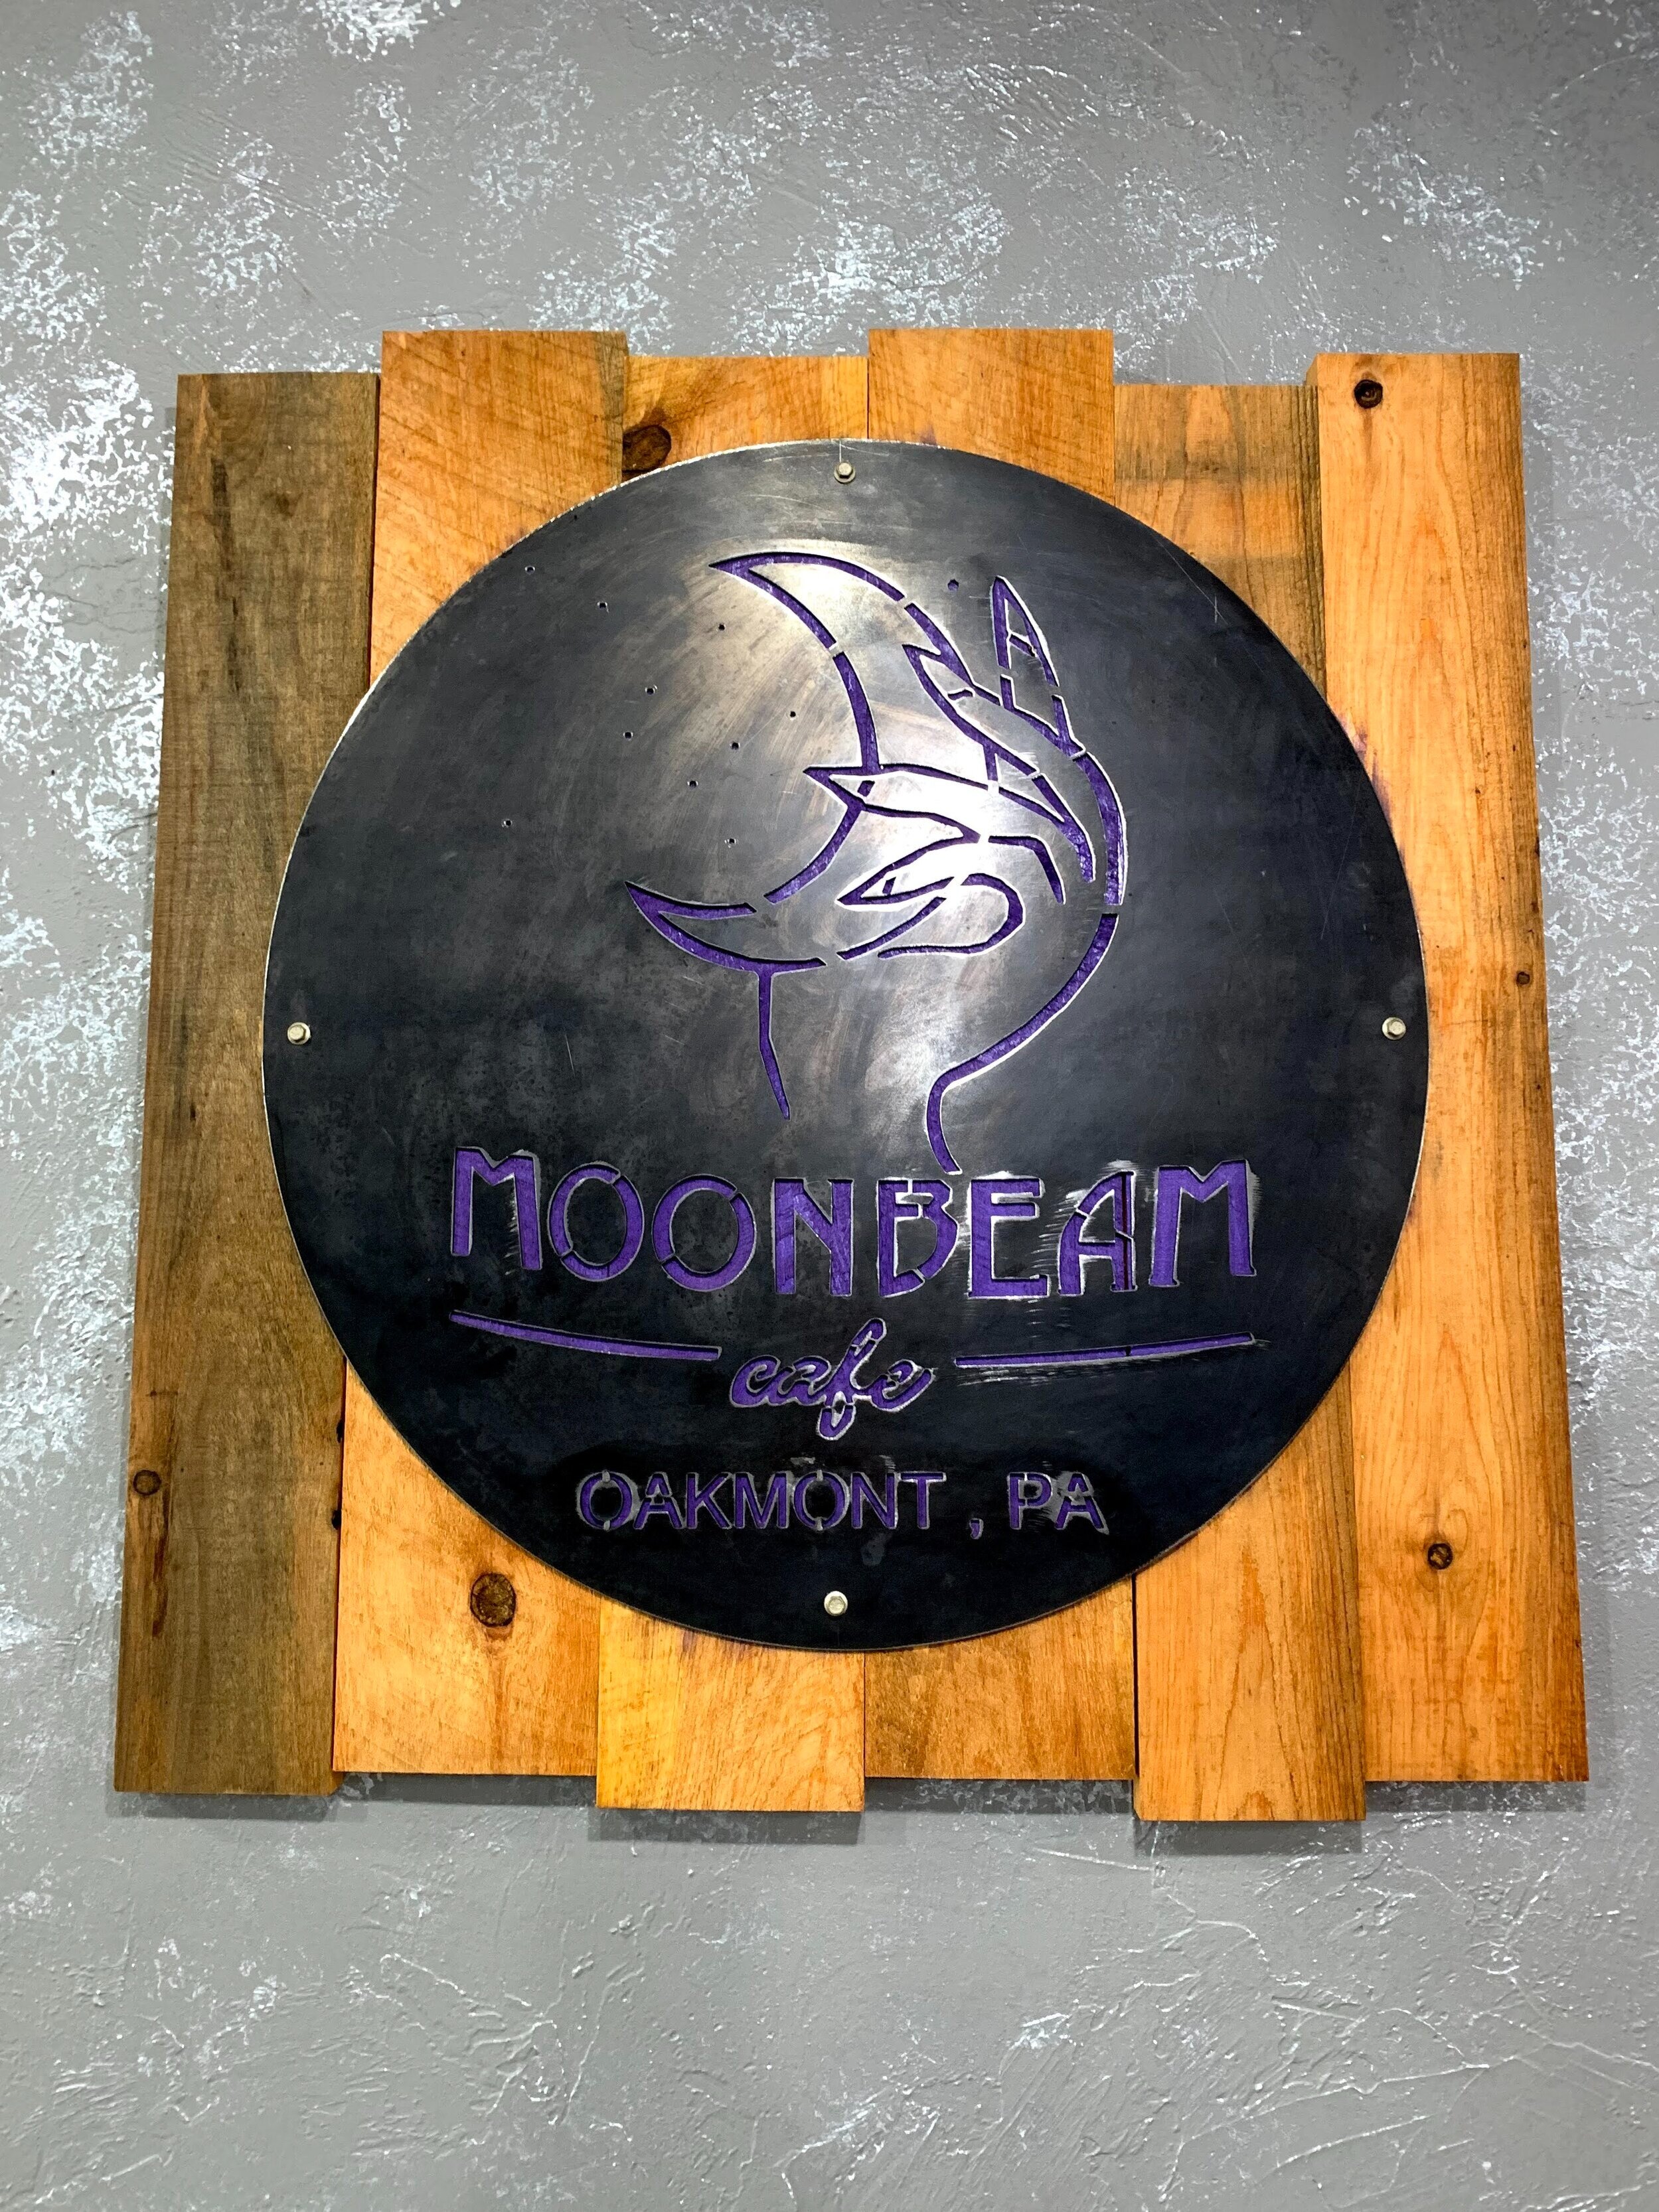 Moonbeam Cafe